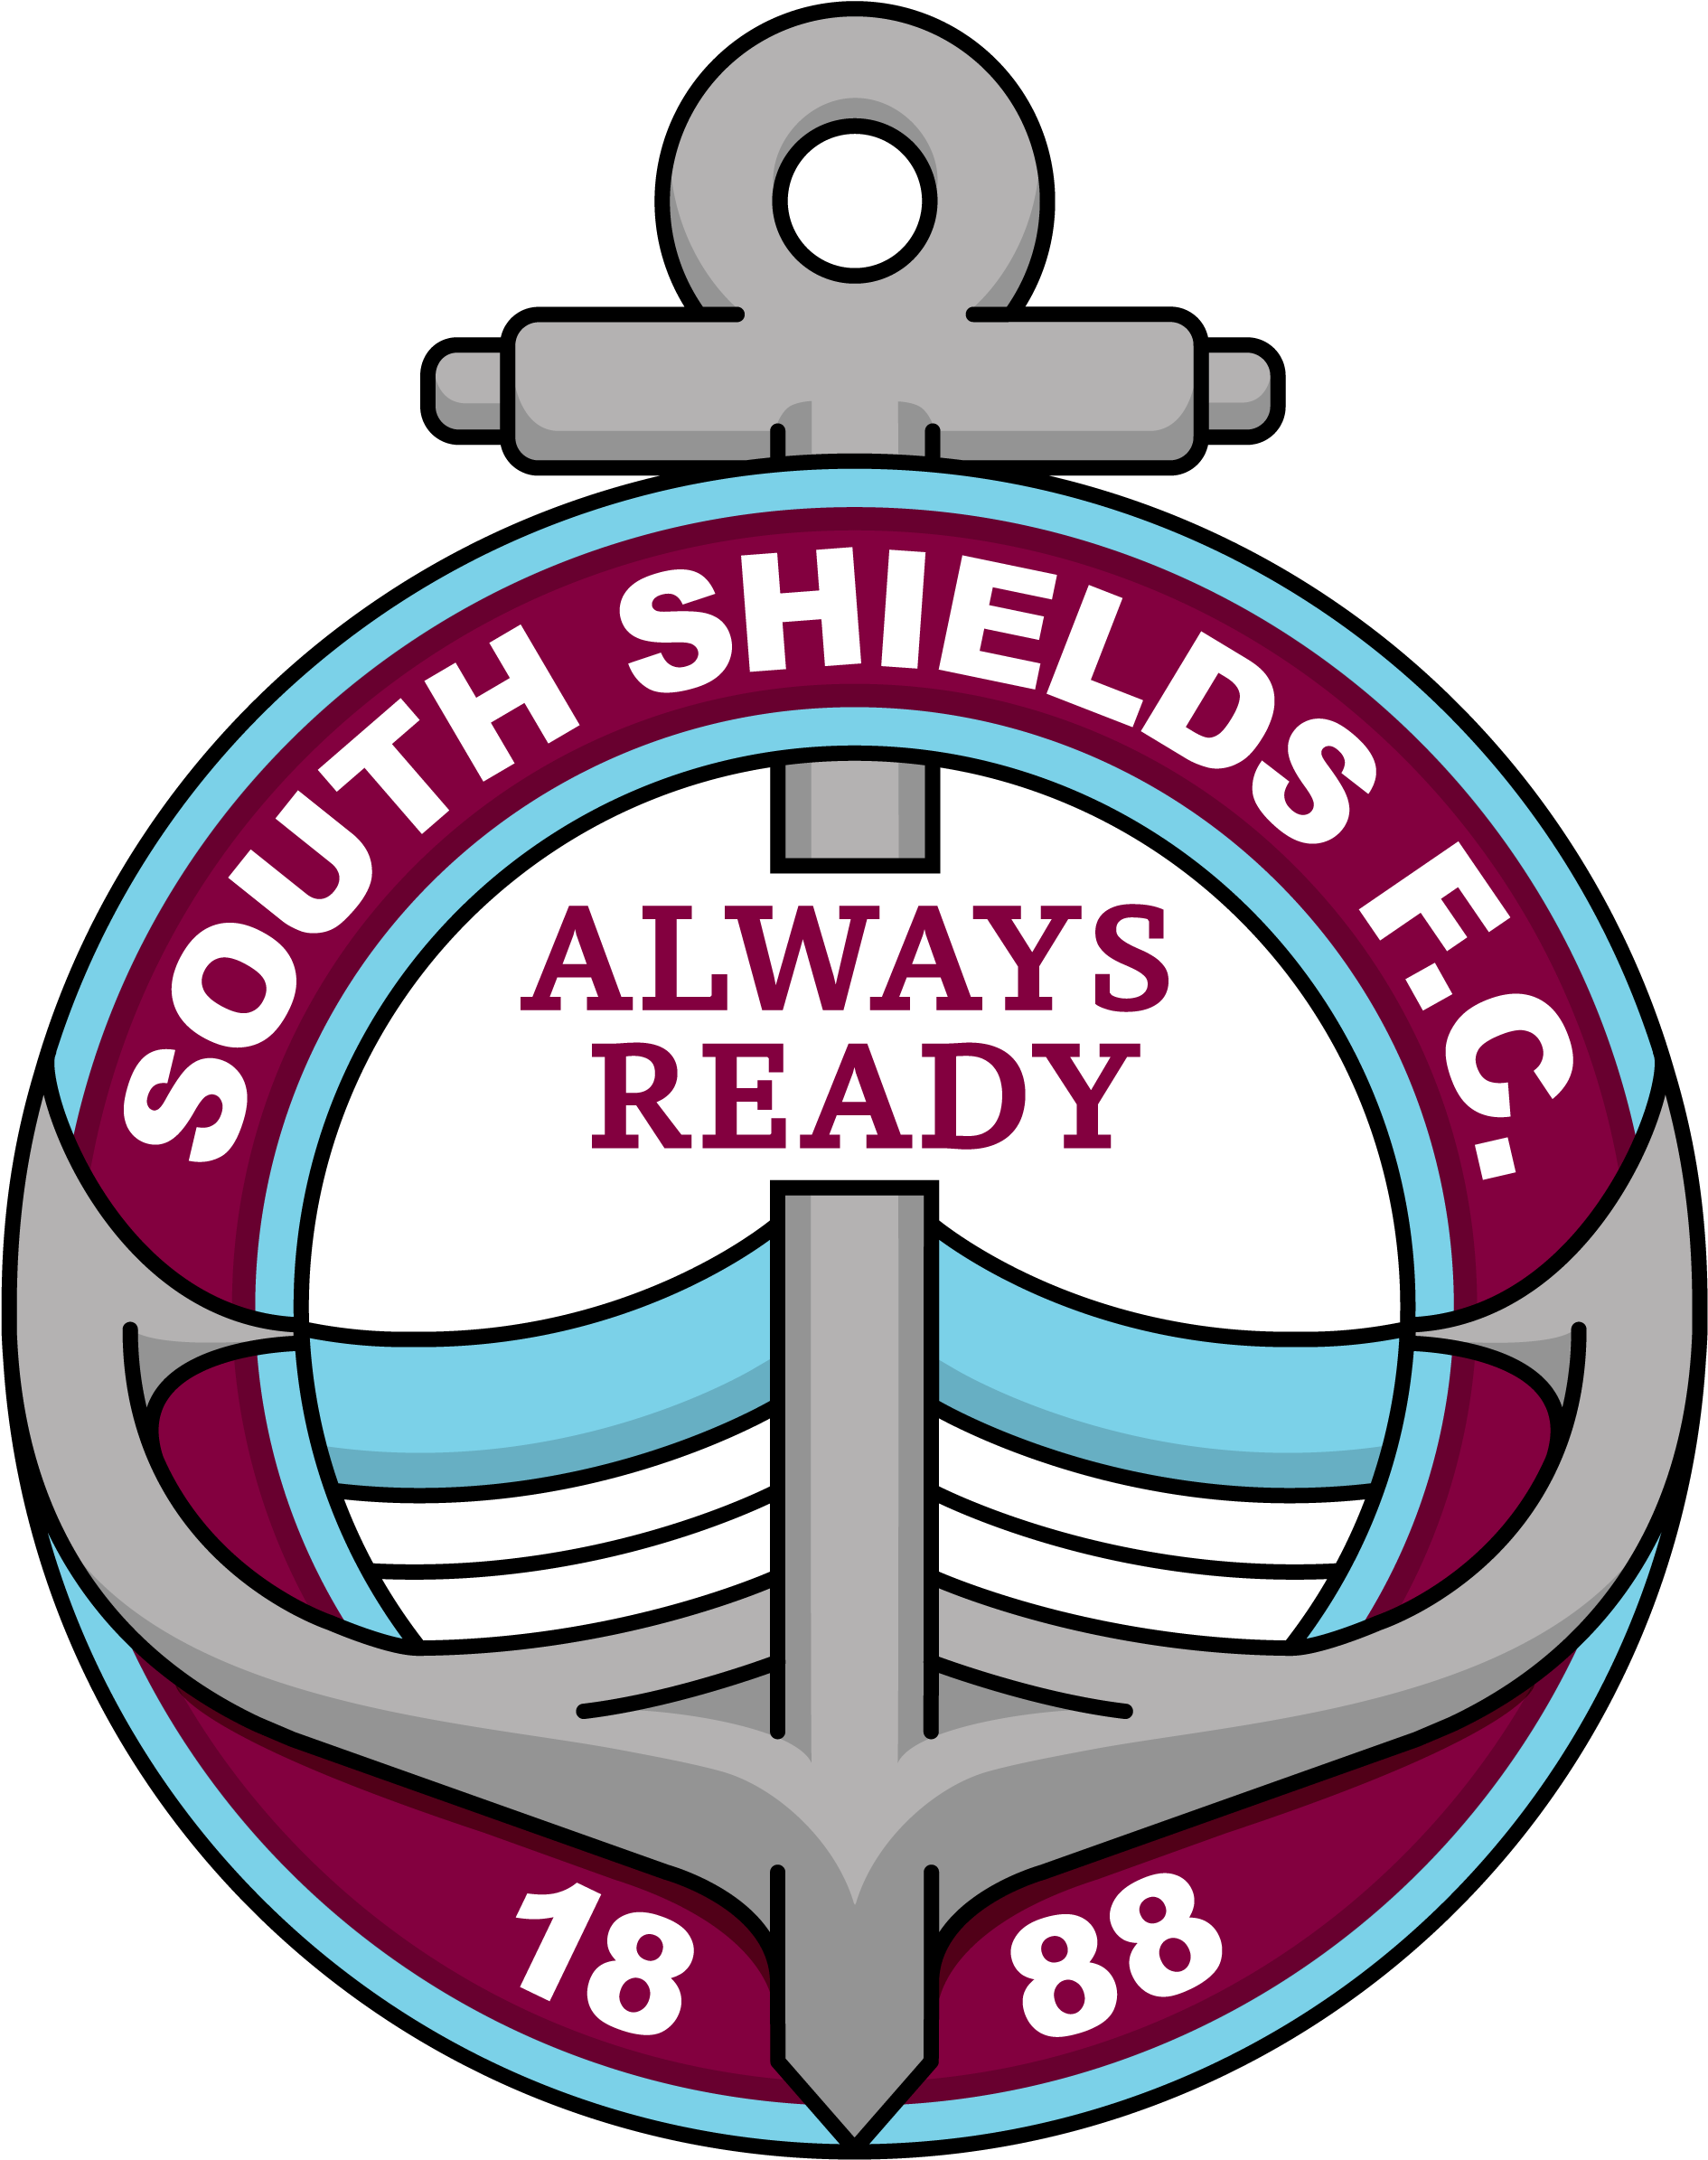 Concession - South Shields Fc Logo (1896x2394)